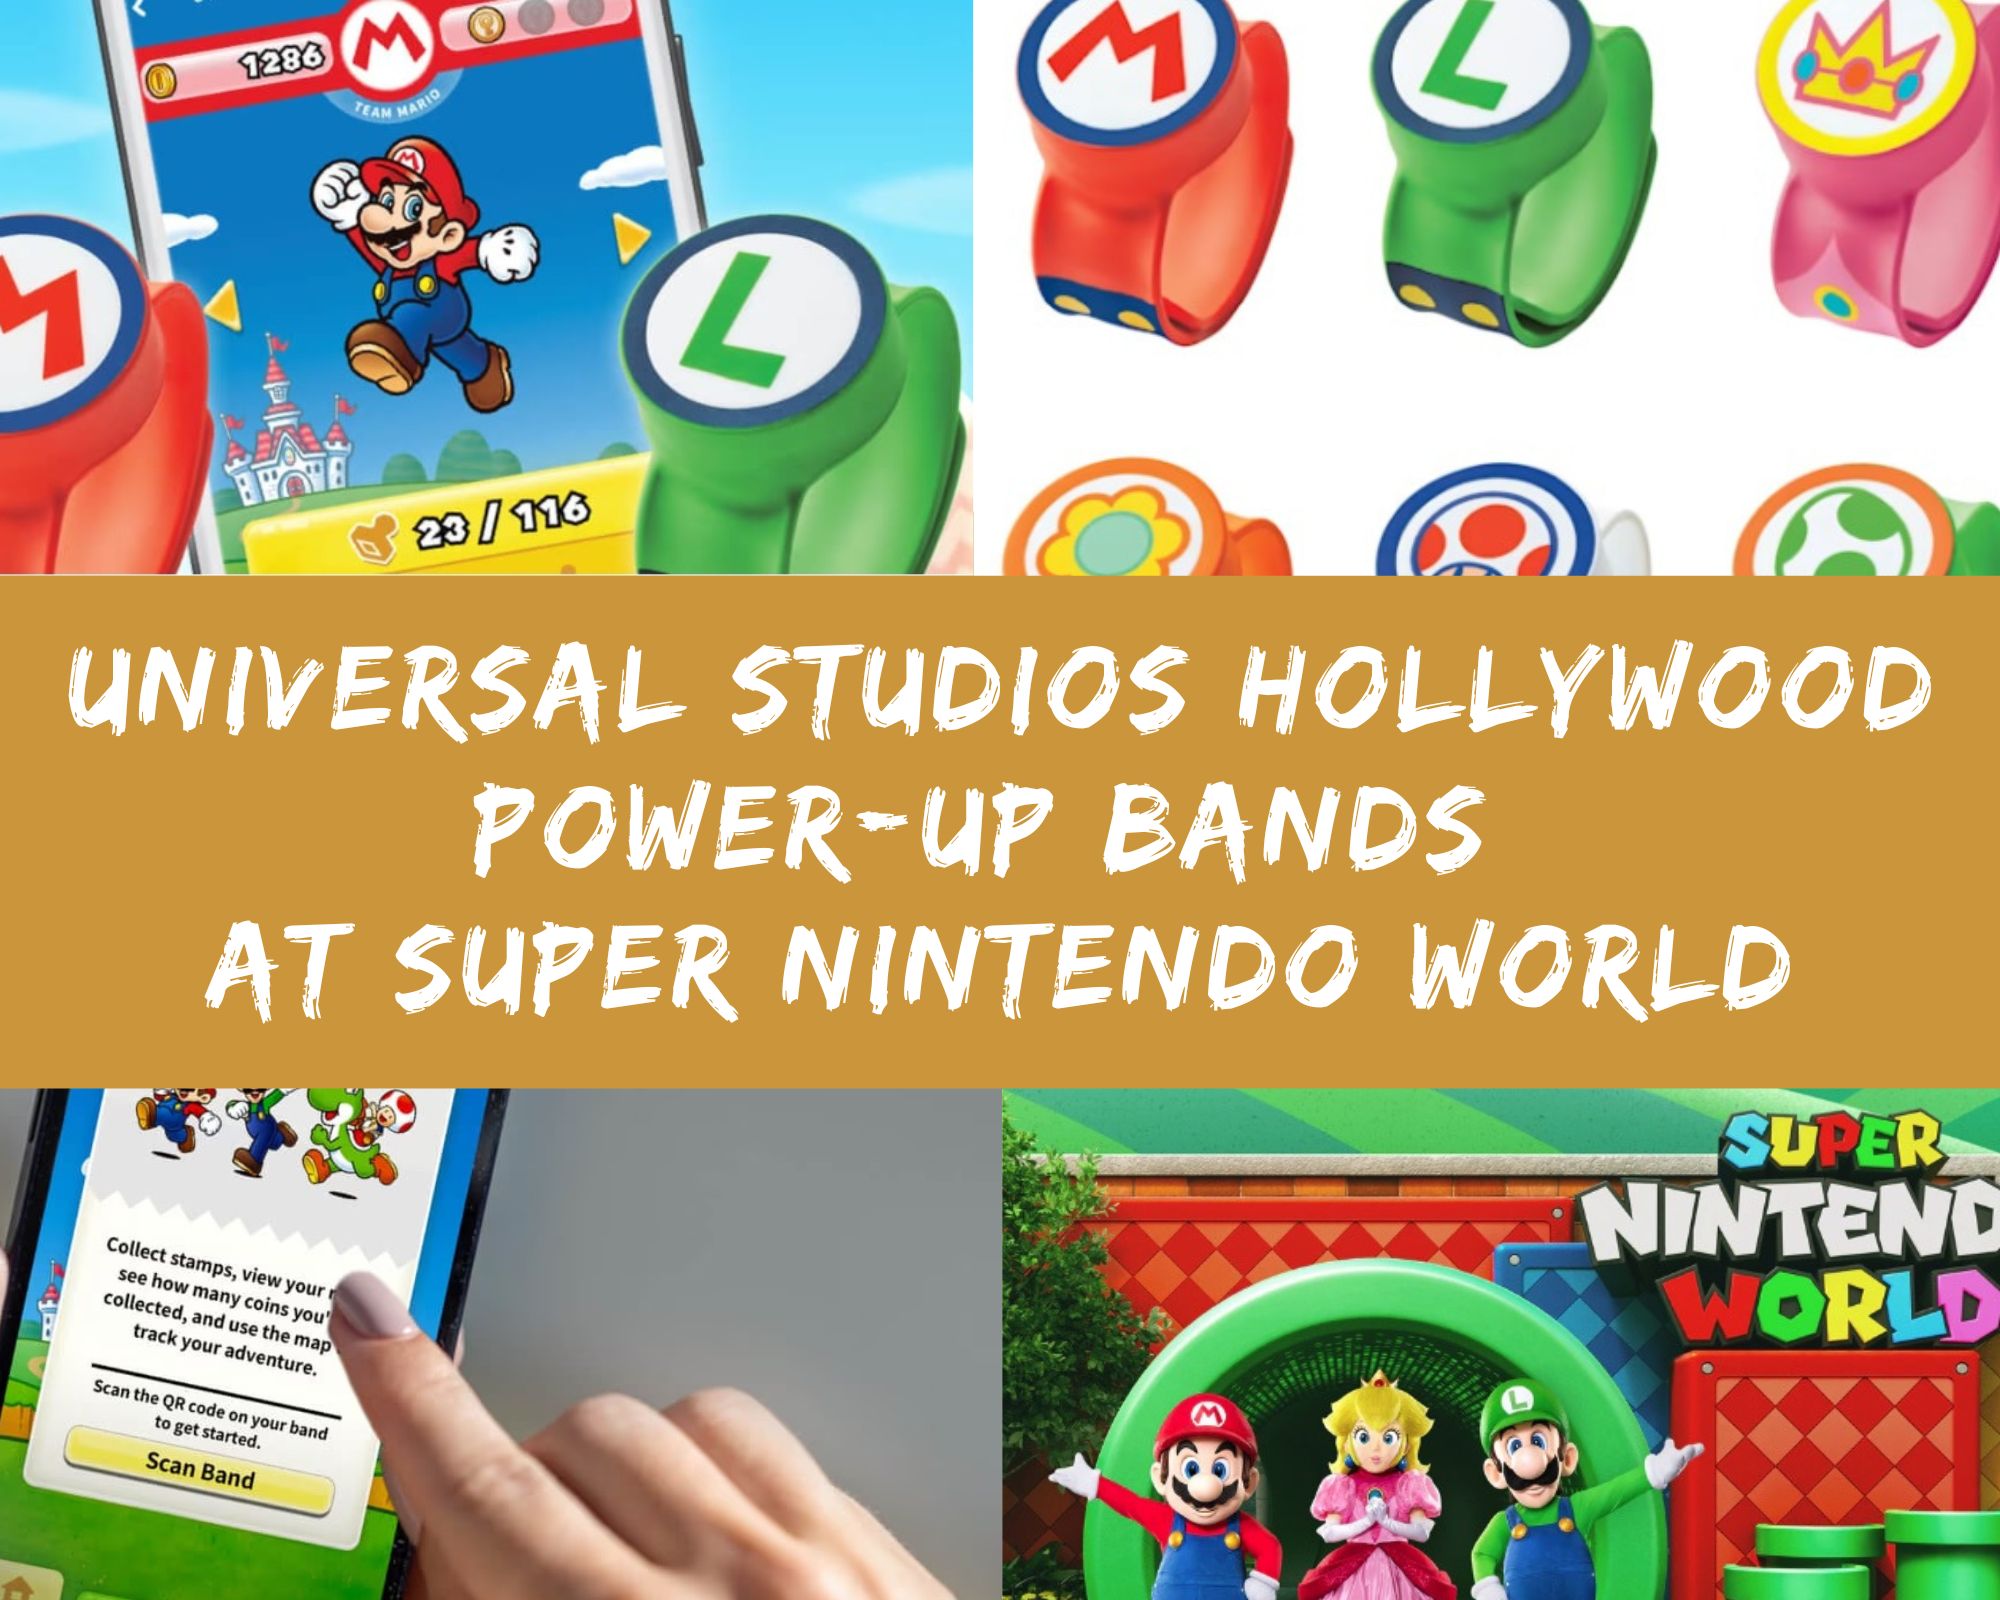 Power-Up Bands at Super Nintendo World